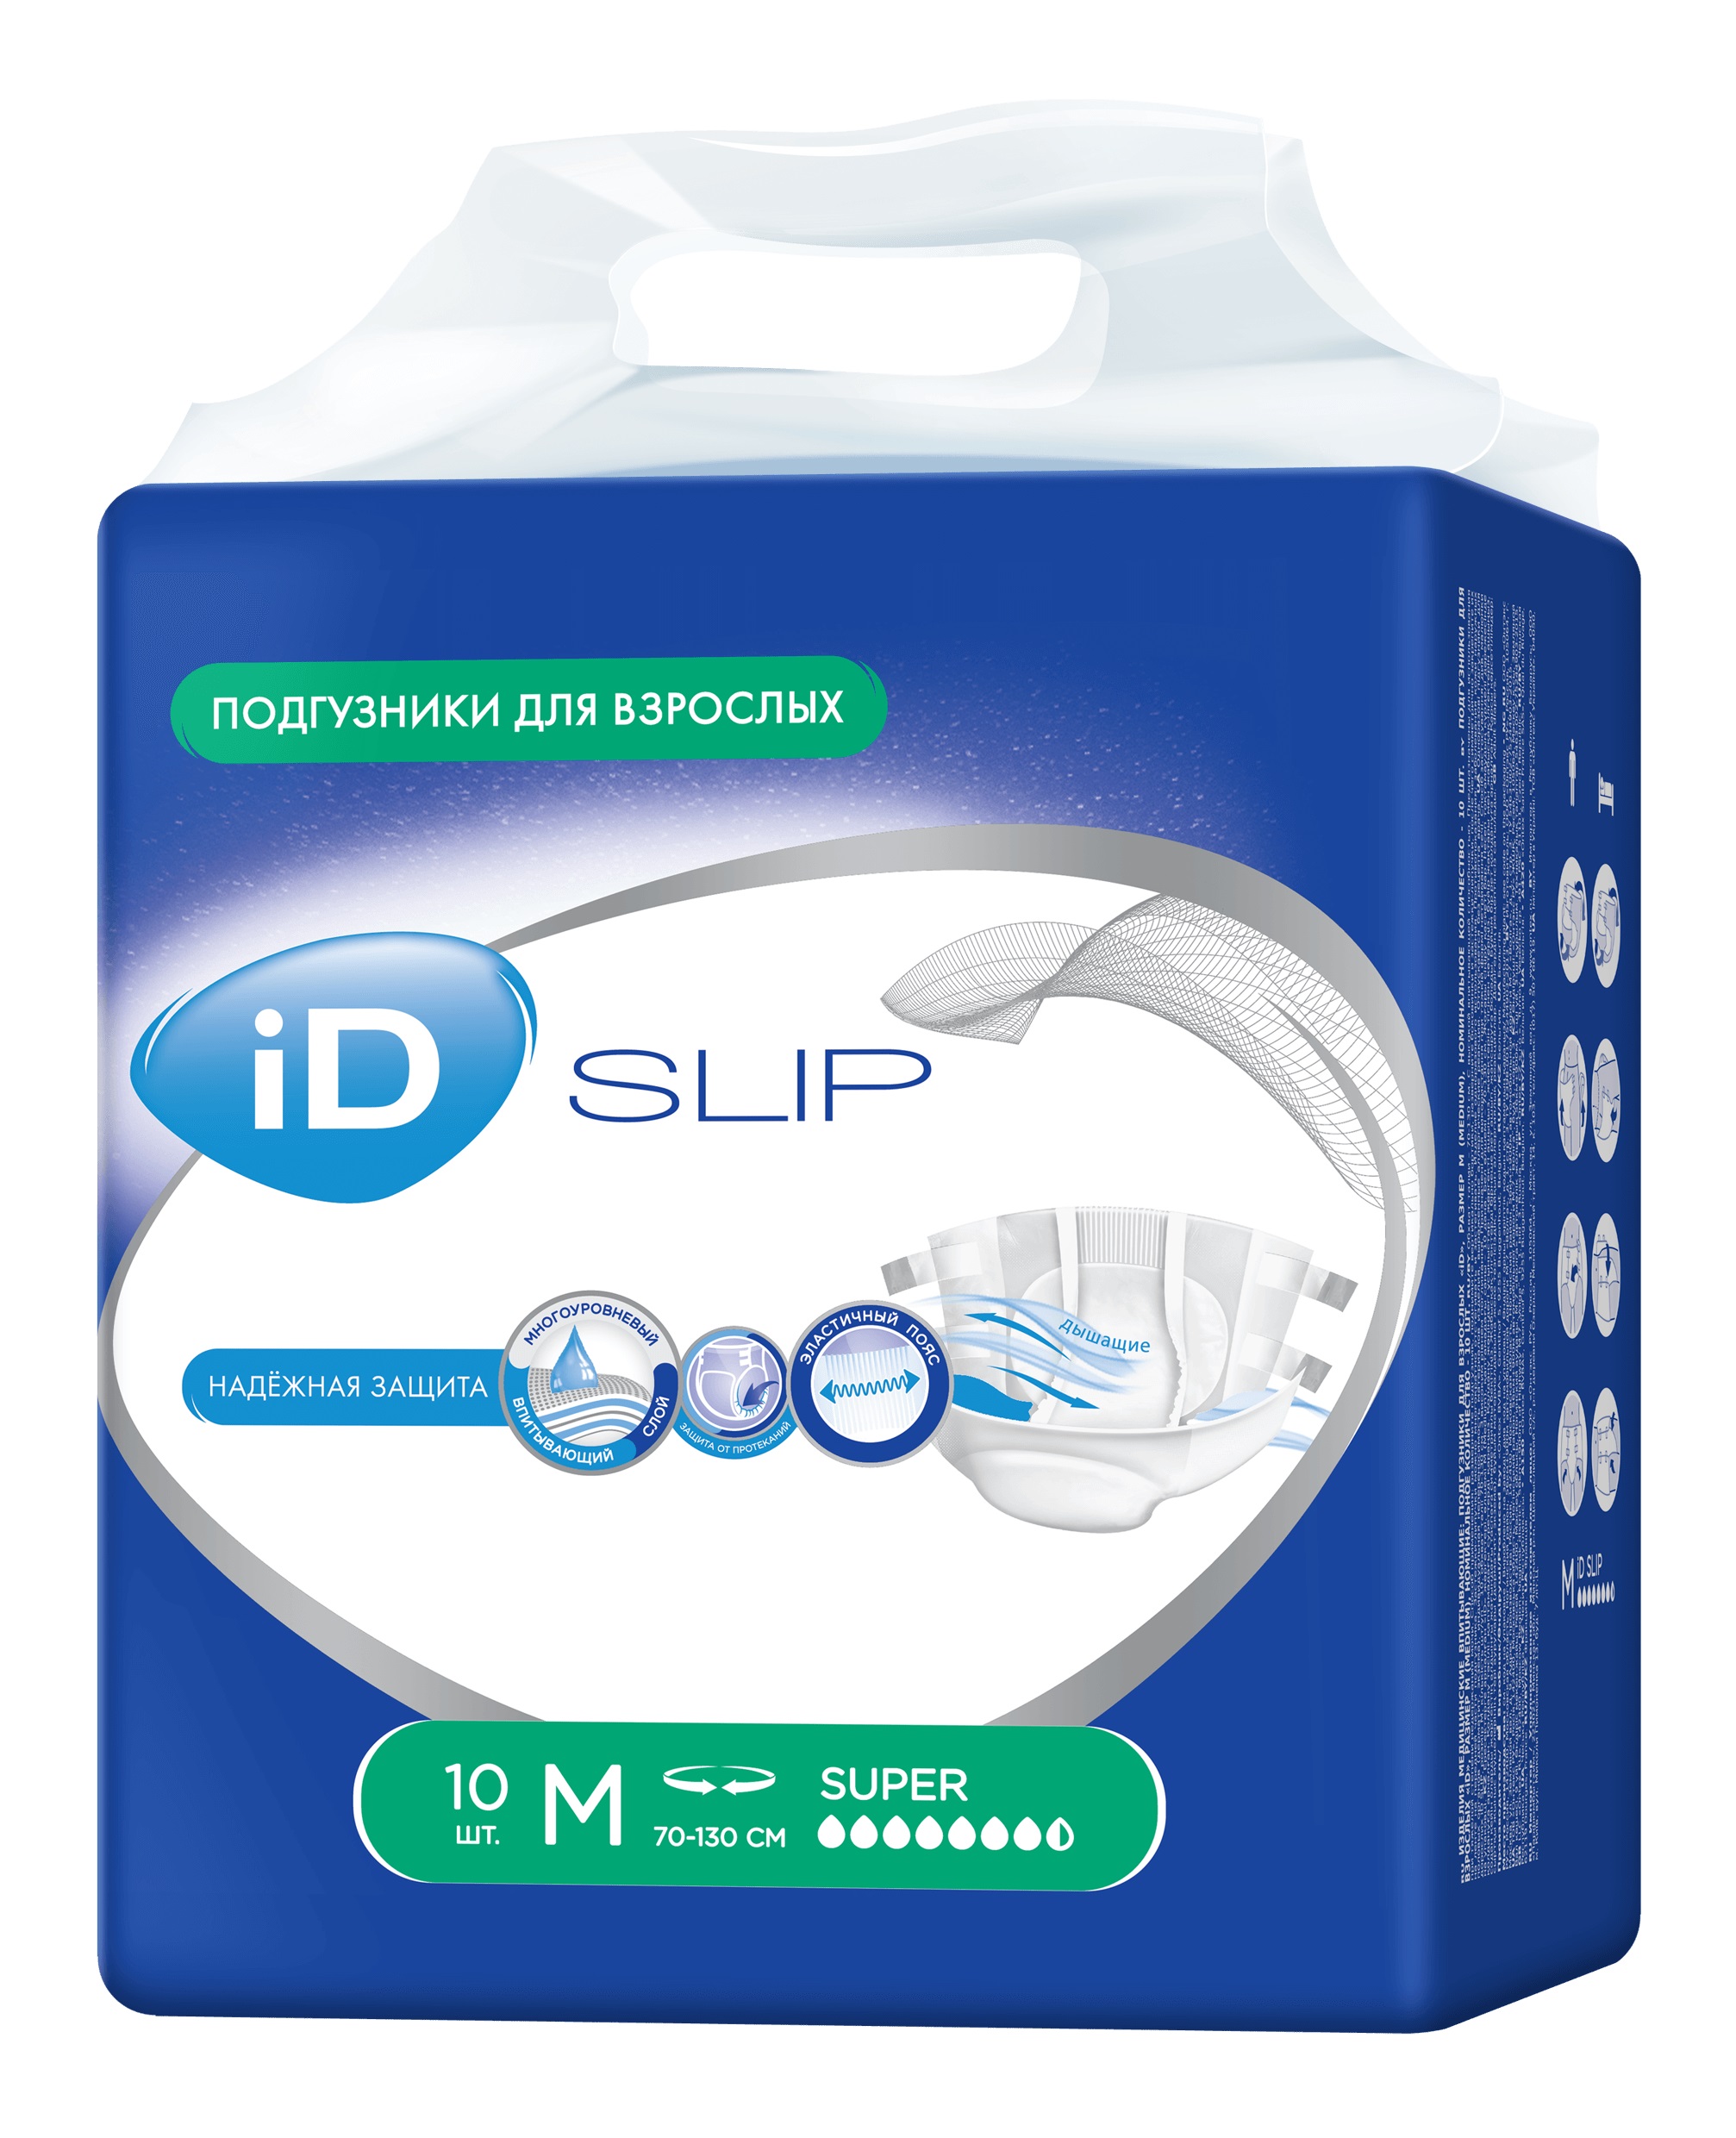 iD Protect Подгузники для взрослых, размер M (обхват талии: 70-130 см), 10шт